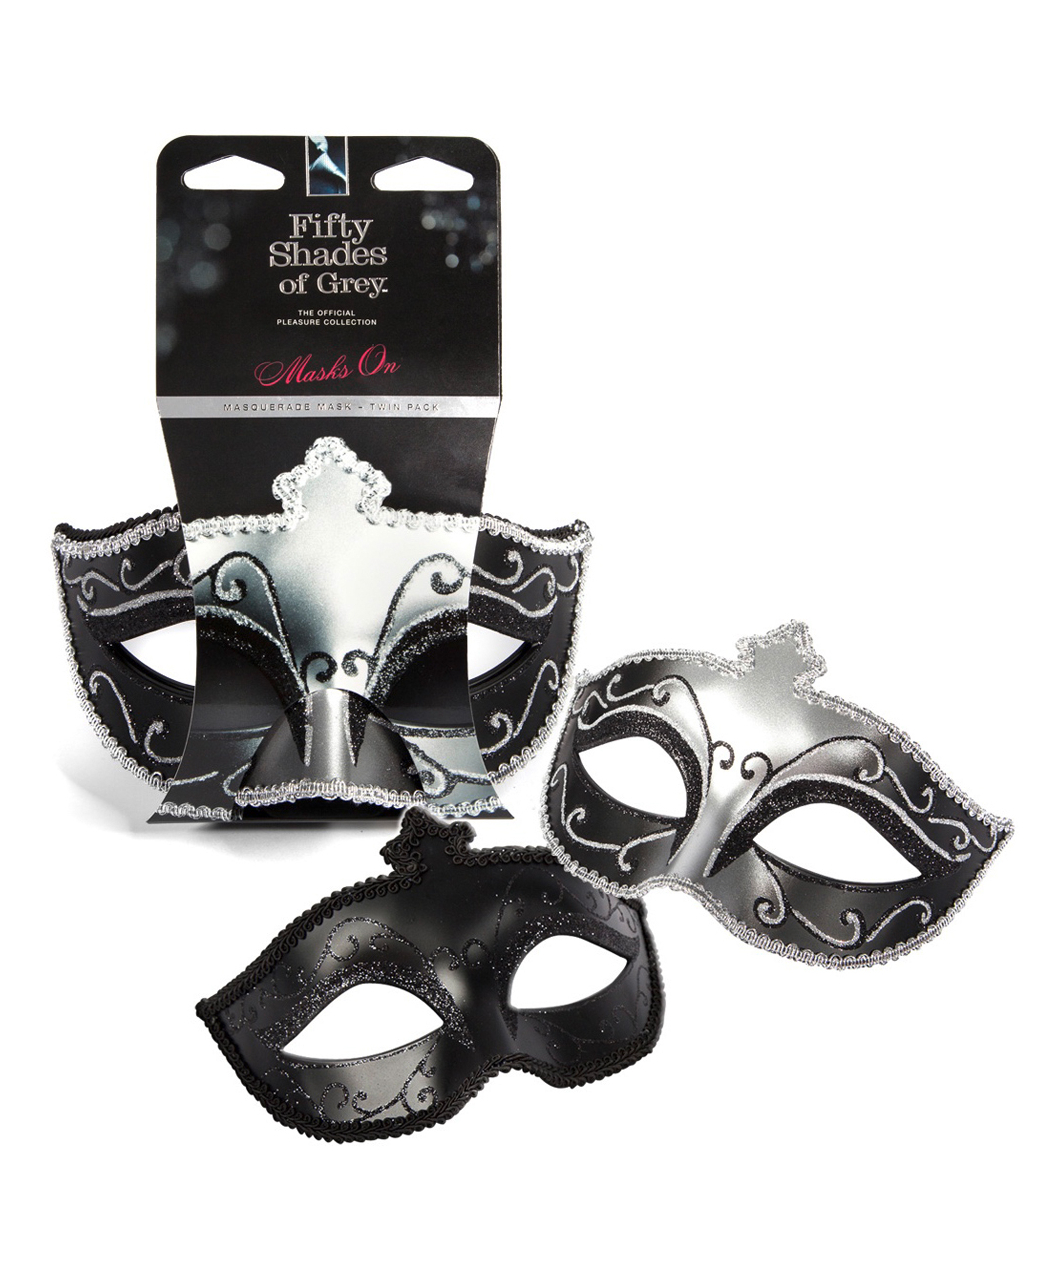 Fifty Shades of Grey Masks On набор карнавальных масок